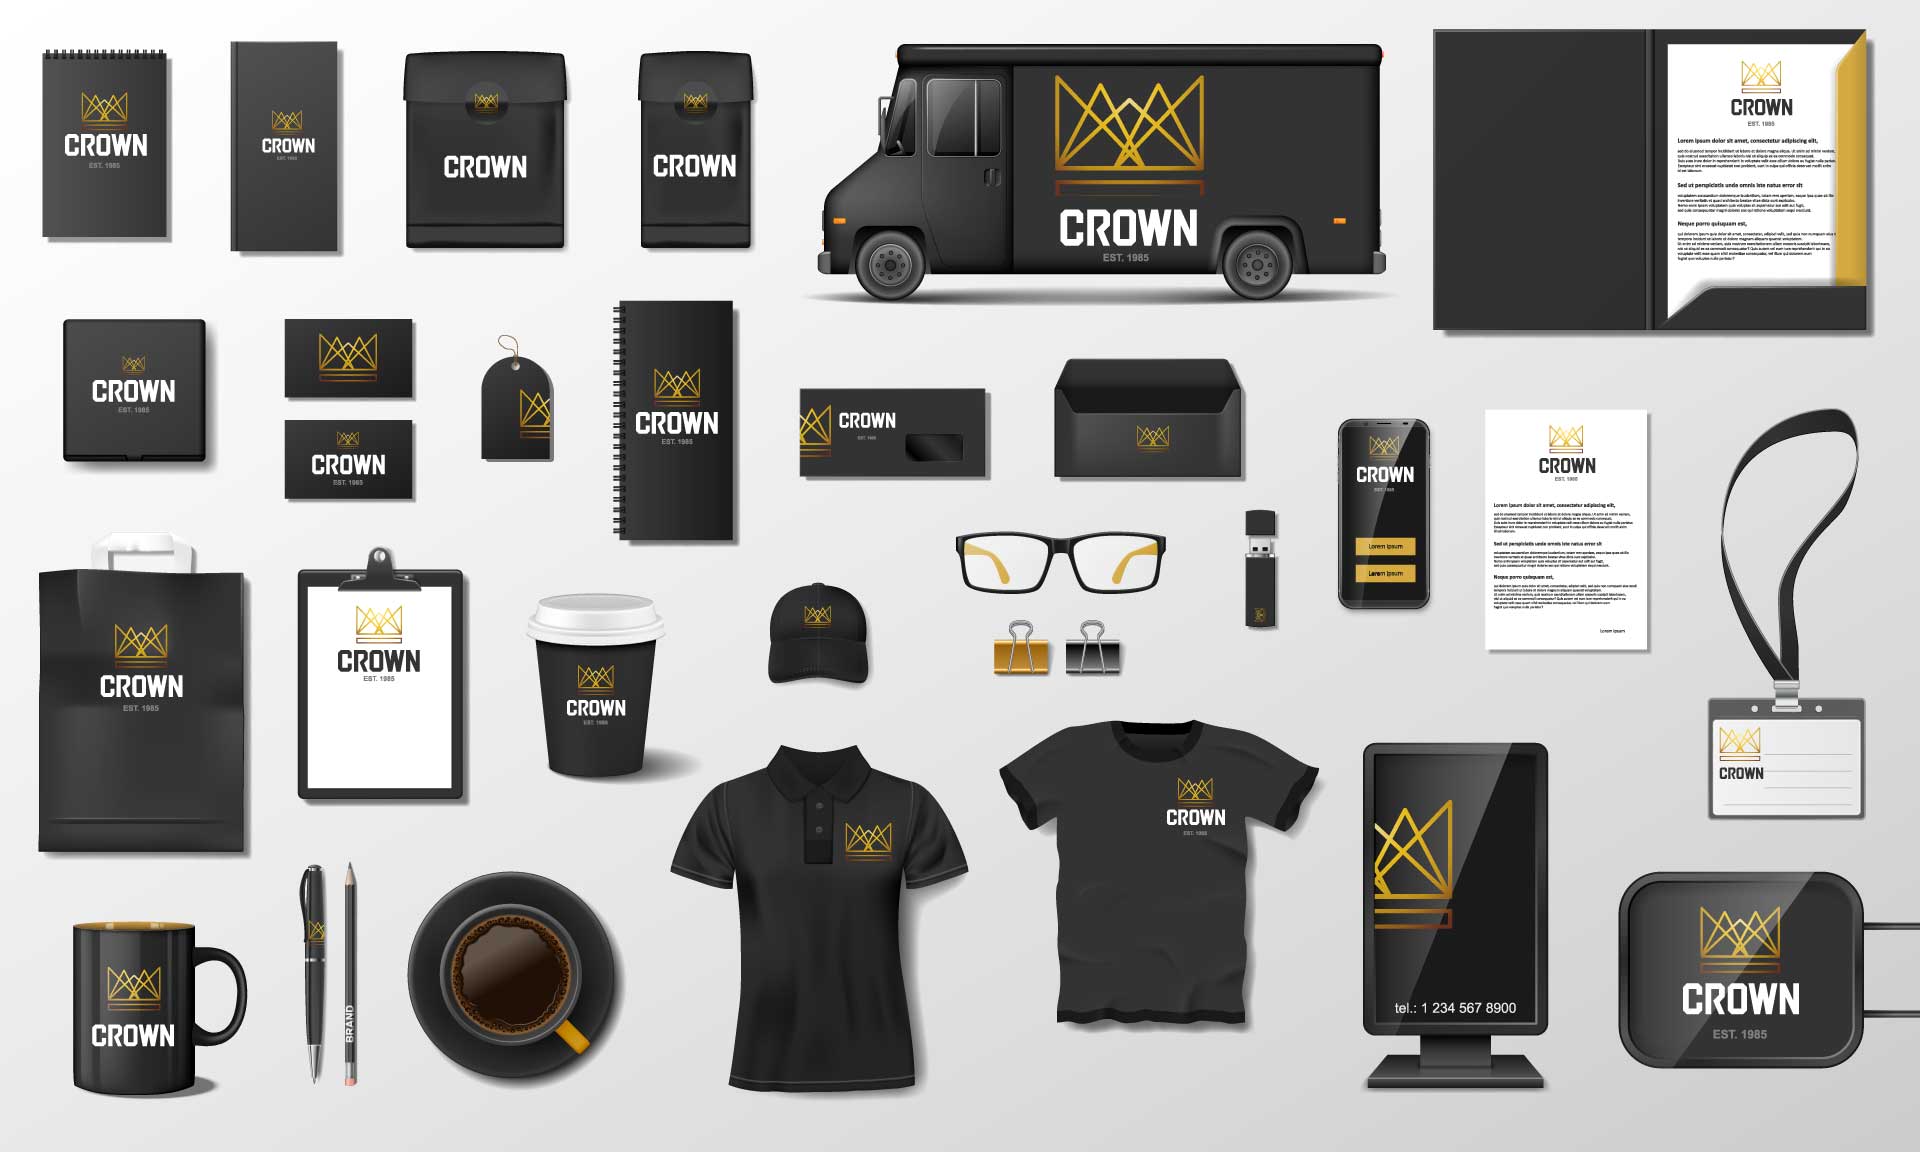 crown company logo branding - Professional Website Design Company